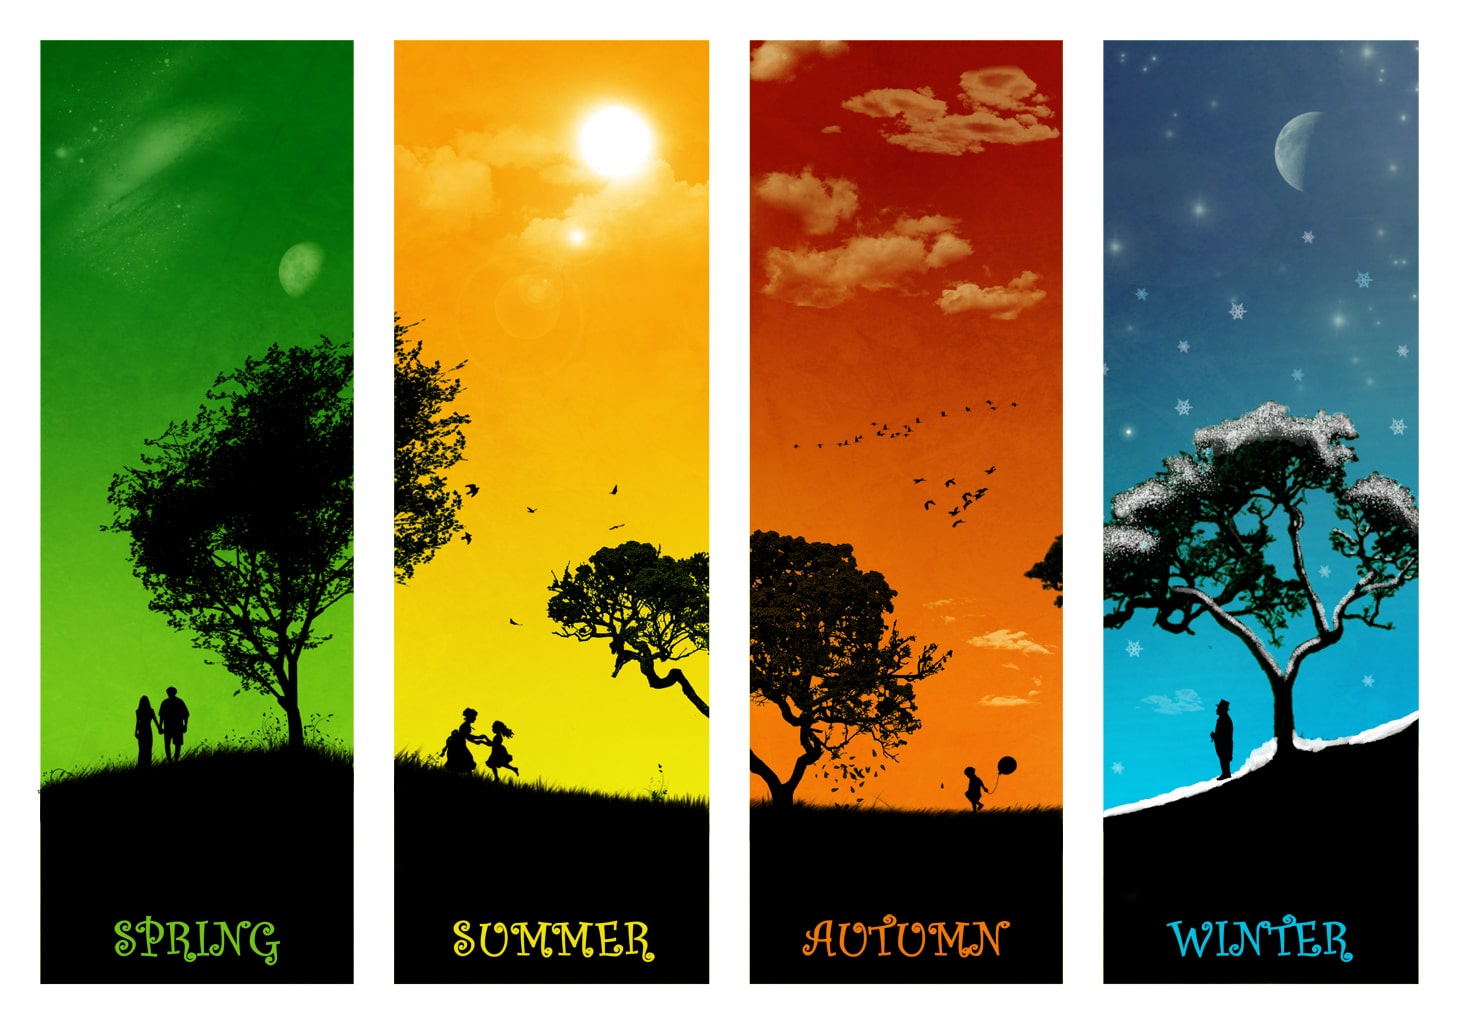 seasons of life